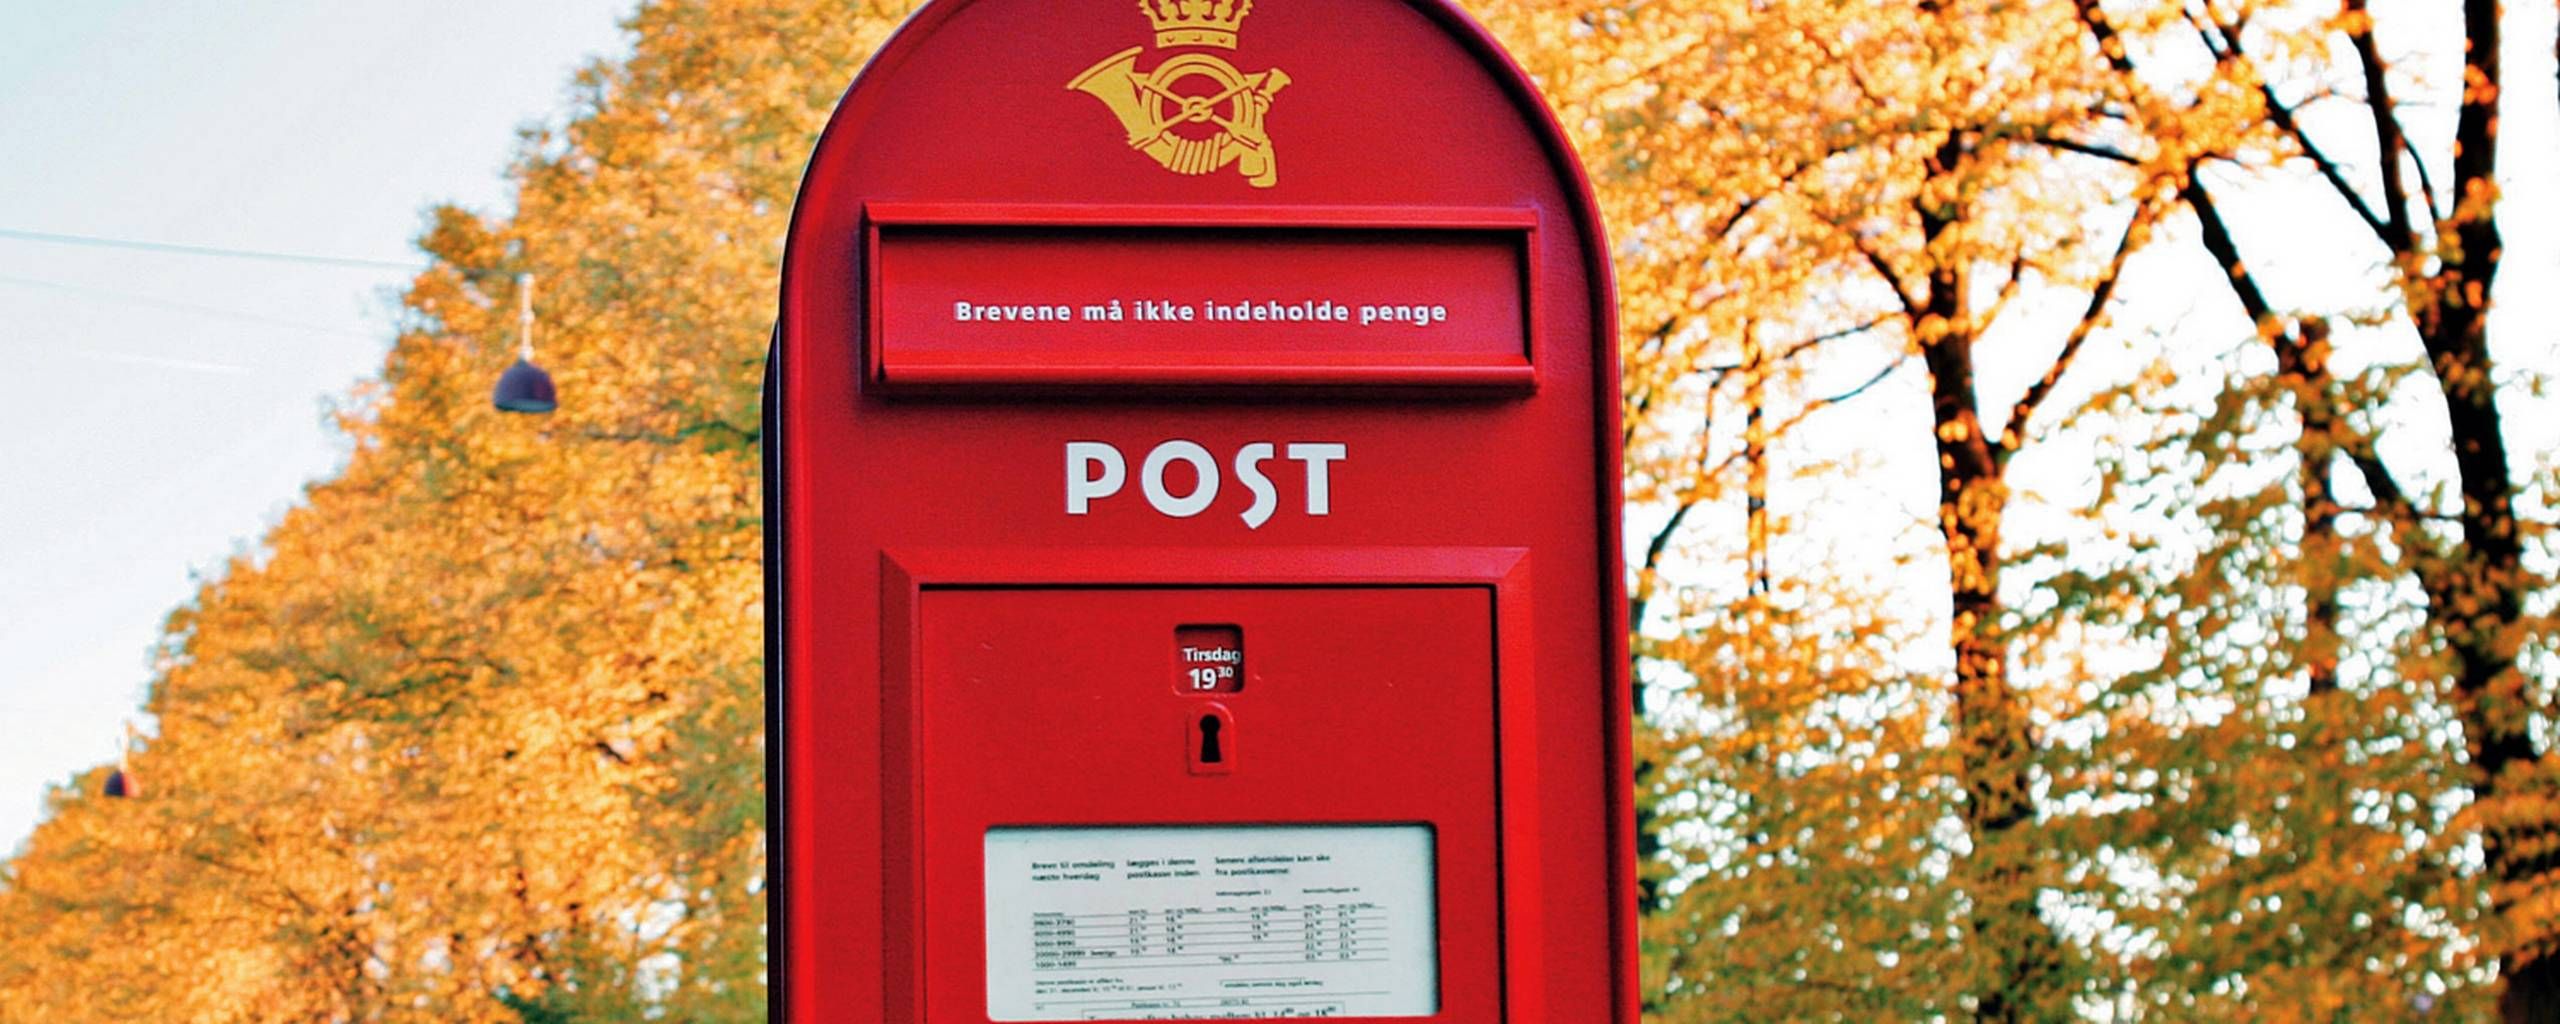 Post advarer mod postkasser